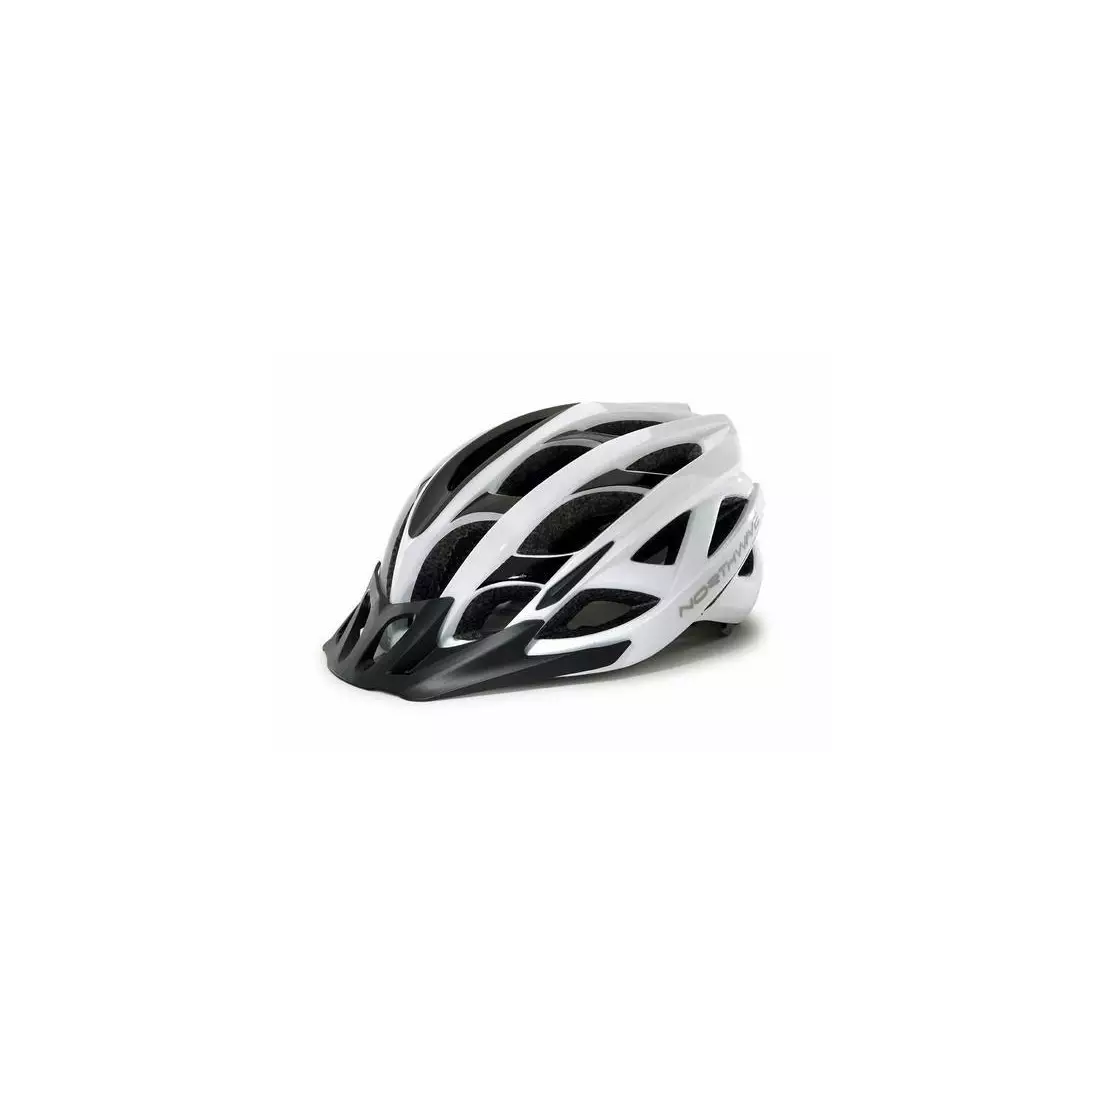 NORTHWAVE RANGER bicycle helmet, white